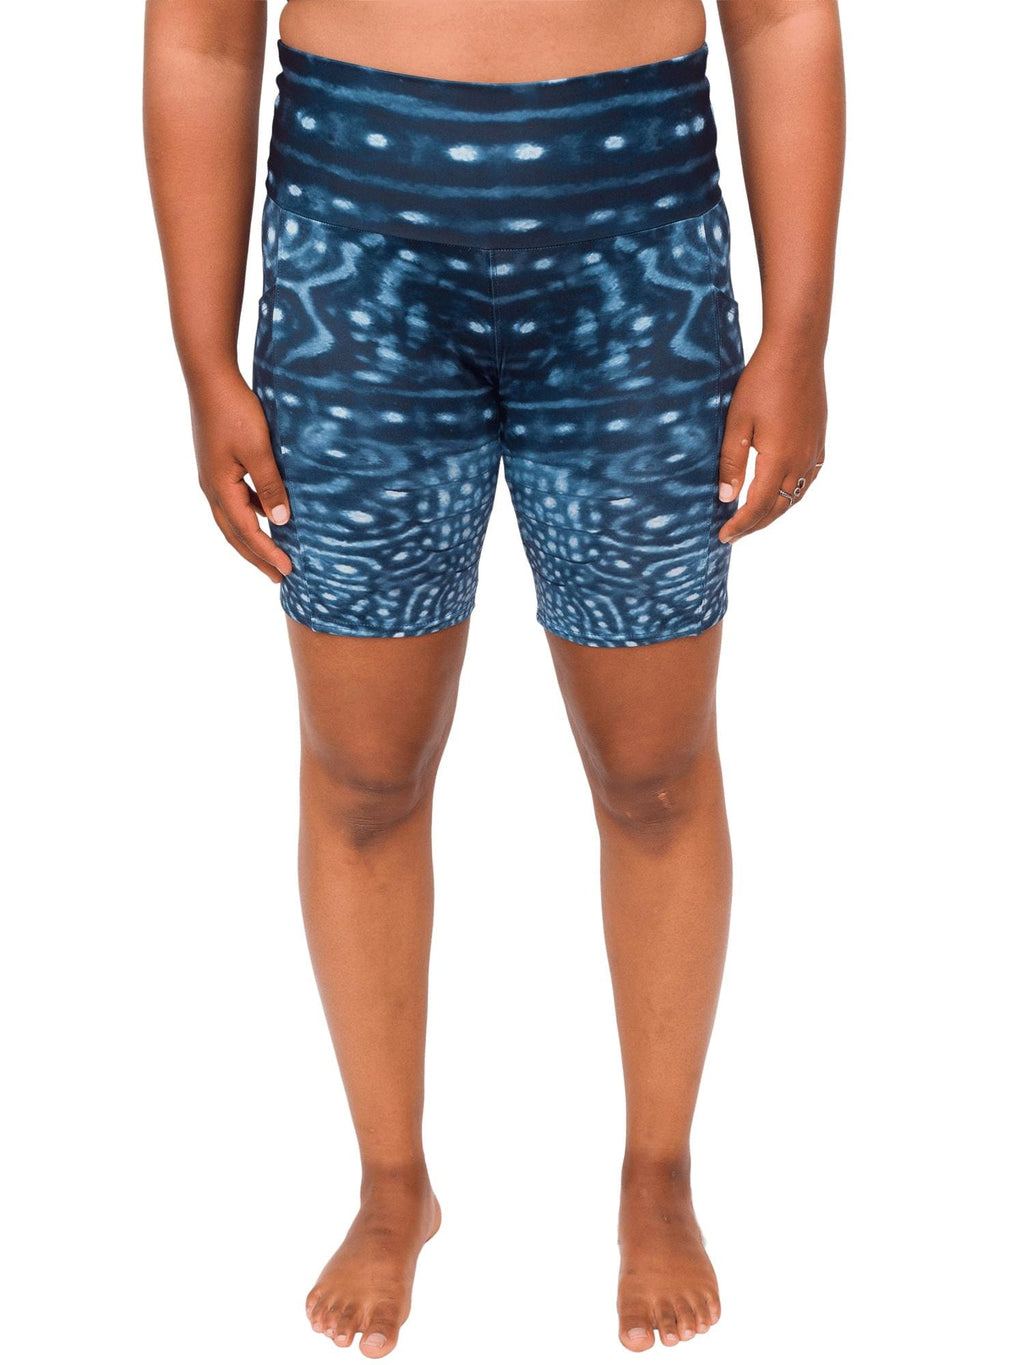 Waterlust whale shark printed biker shorts - side view